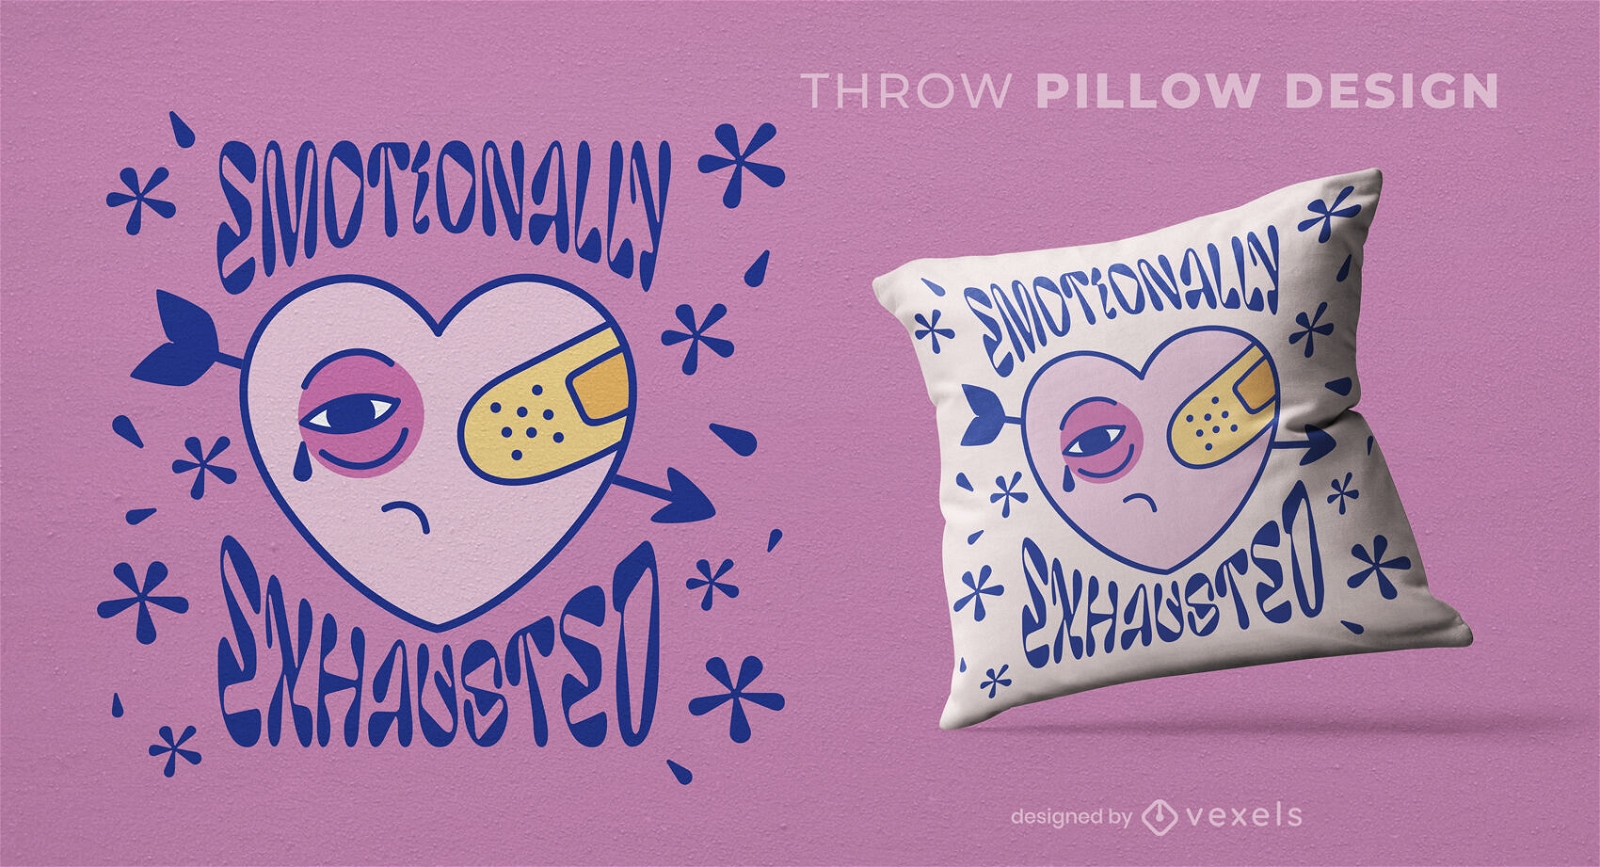 Diseño de almohada de tiro anti-valentines corazón roto